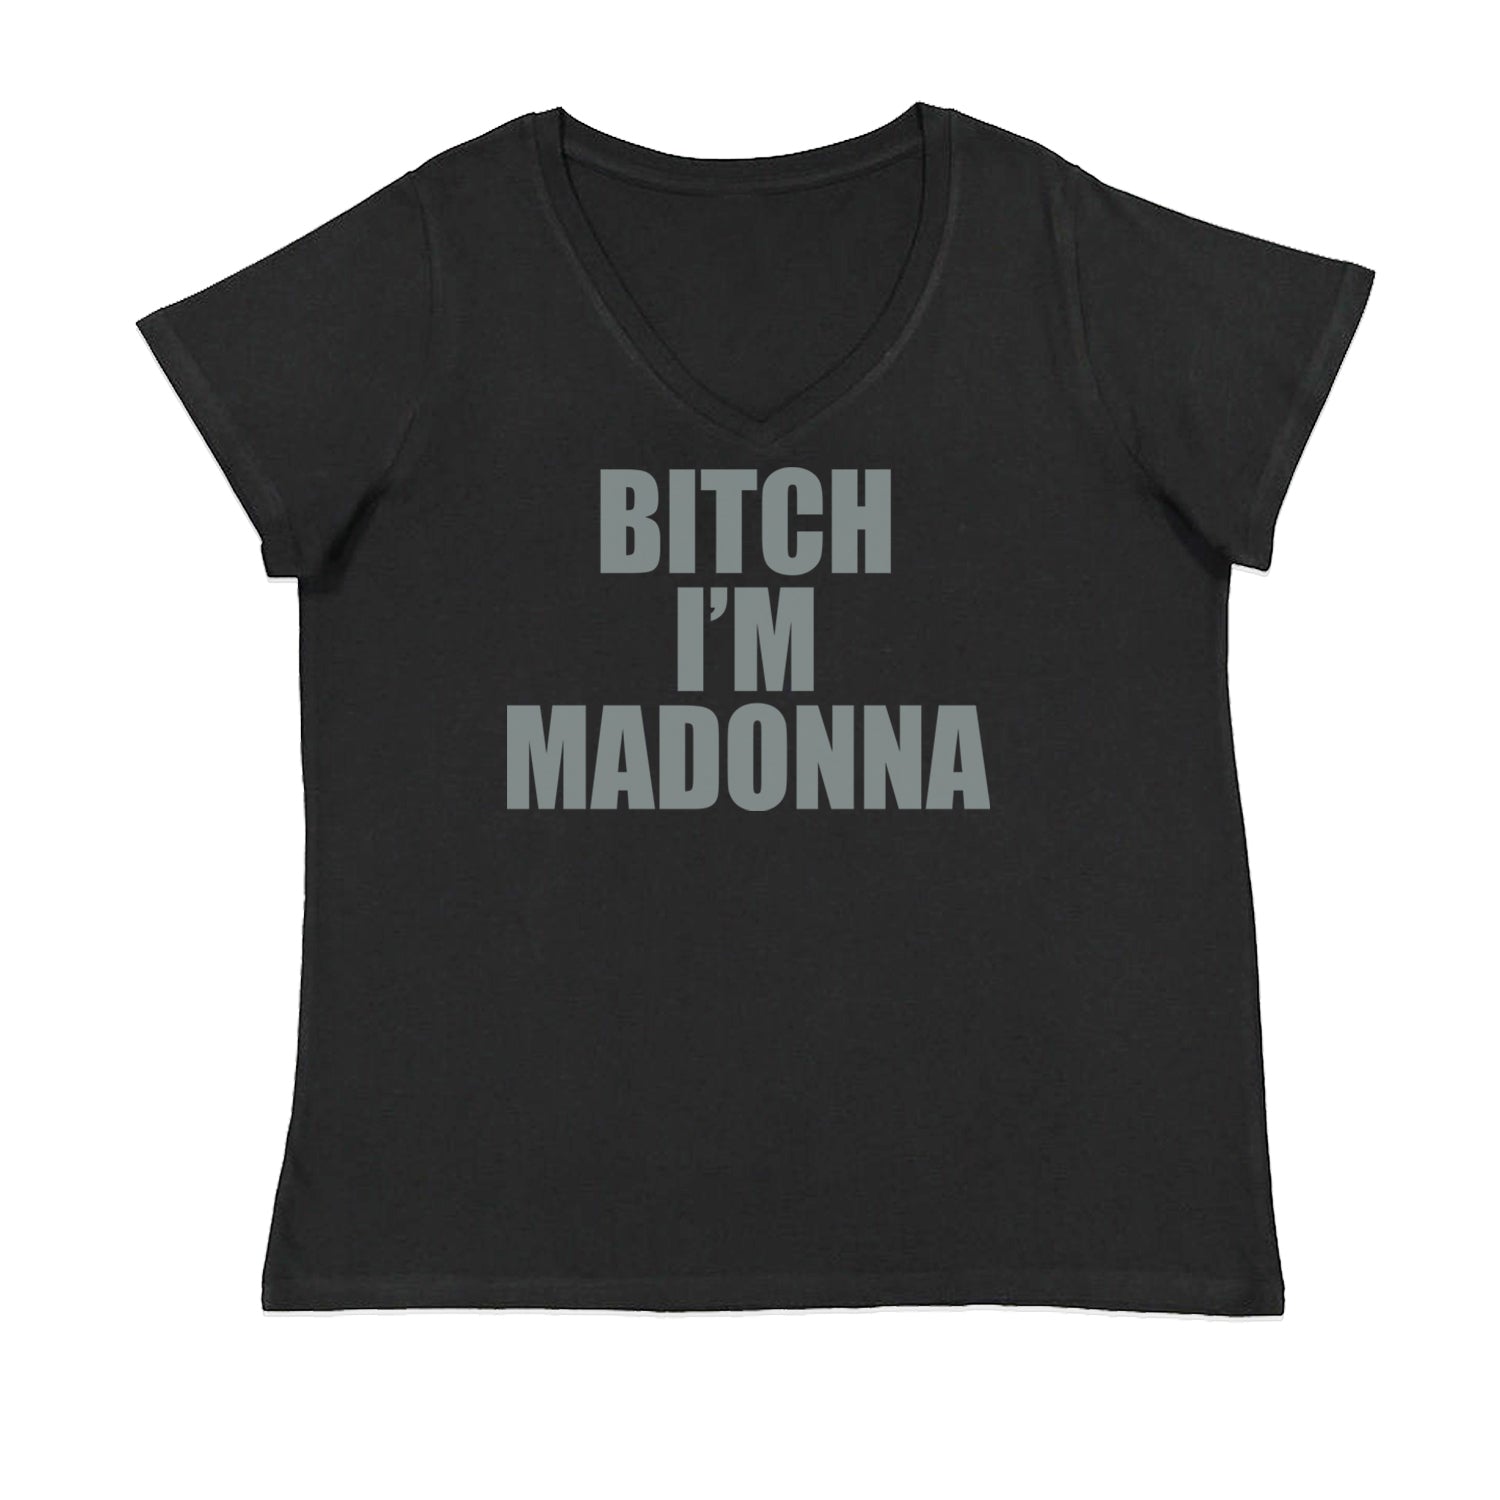 B-tch I'm Madonna Celebration Womens Plus Size V-Neck T-shirt